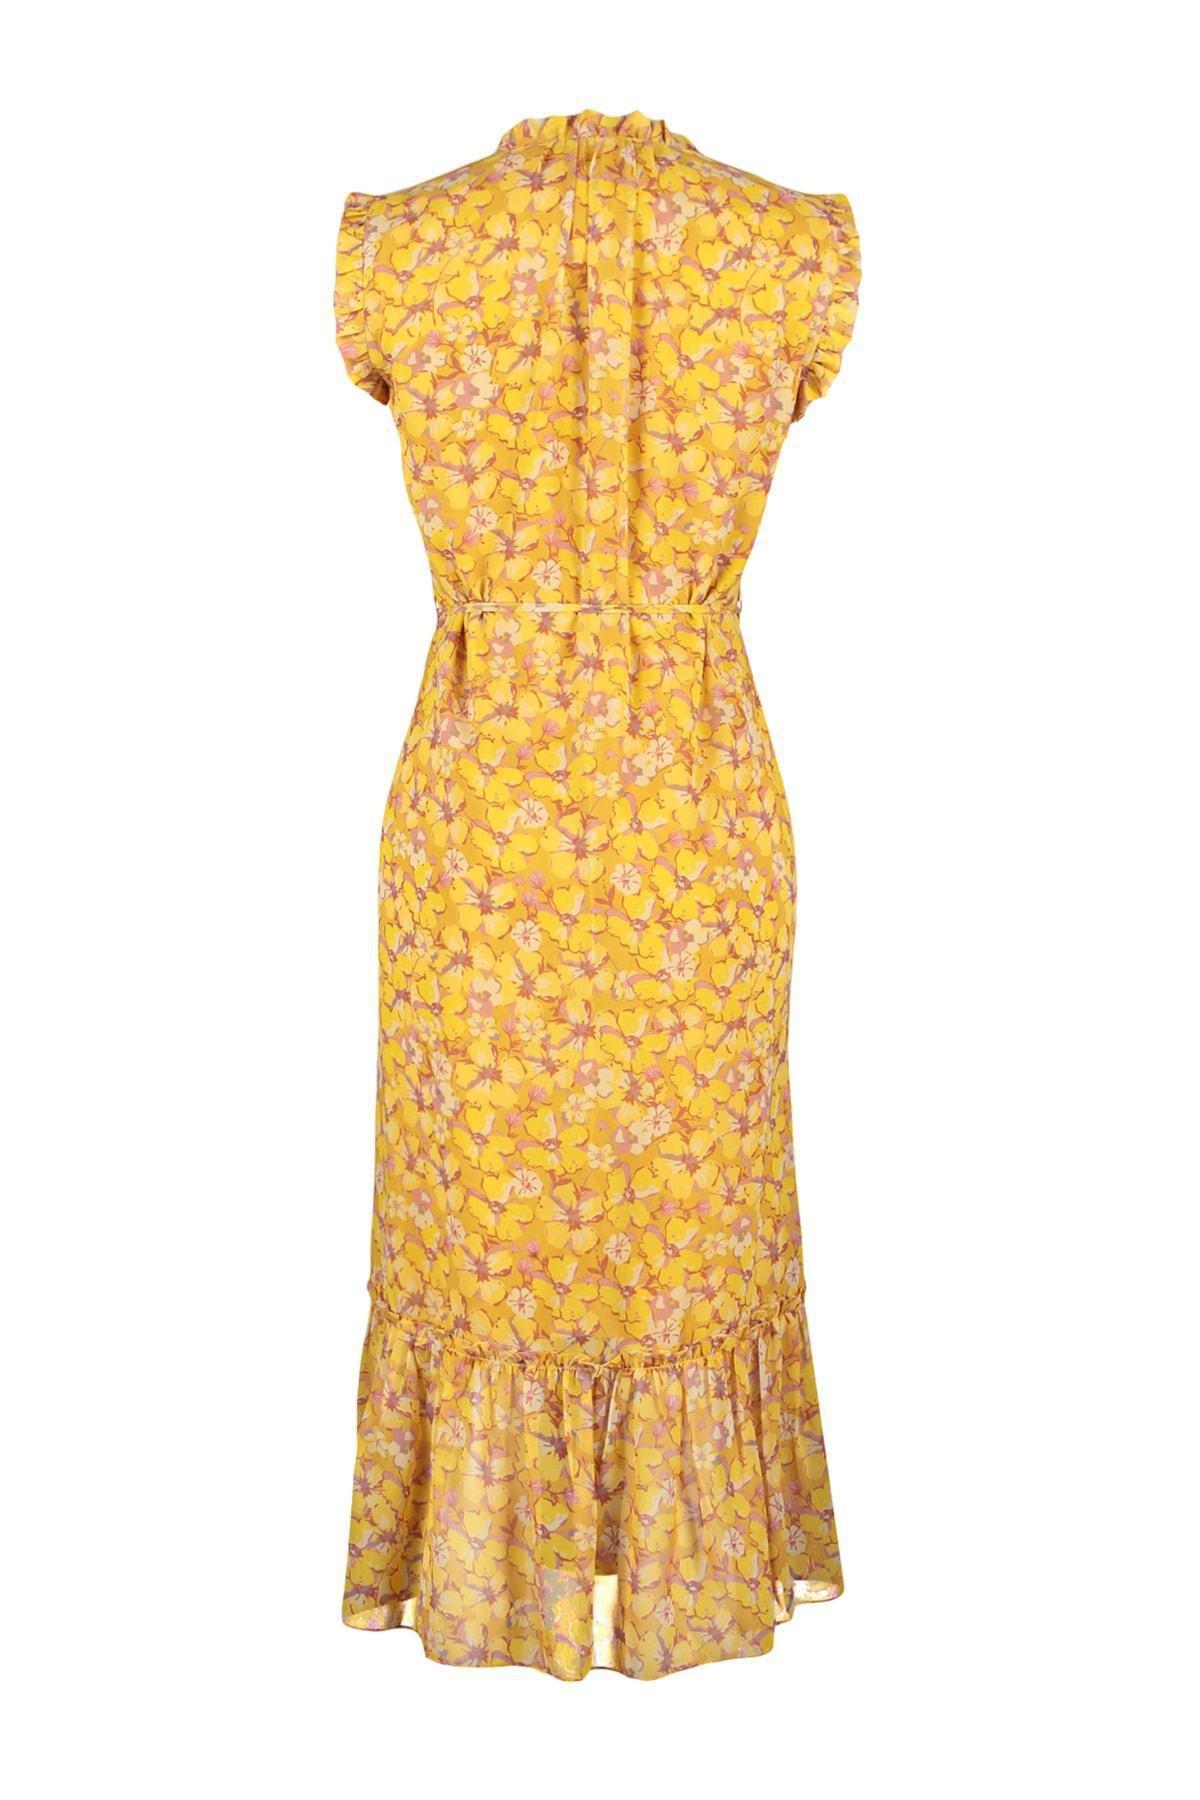 Trendyol - Yellow Floral Standing Collar Shift Dress